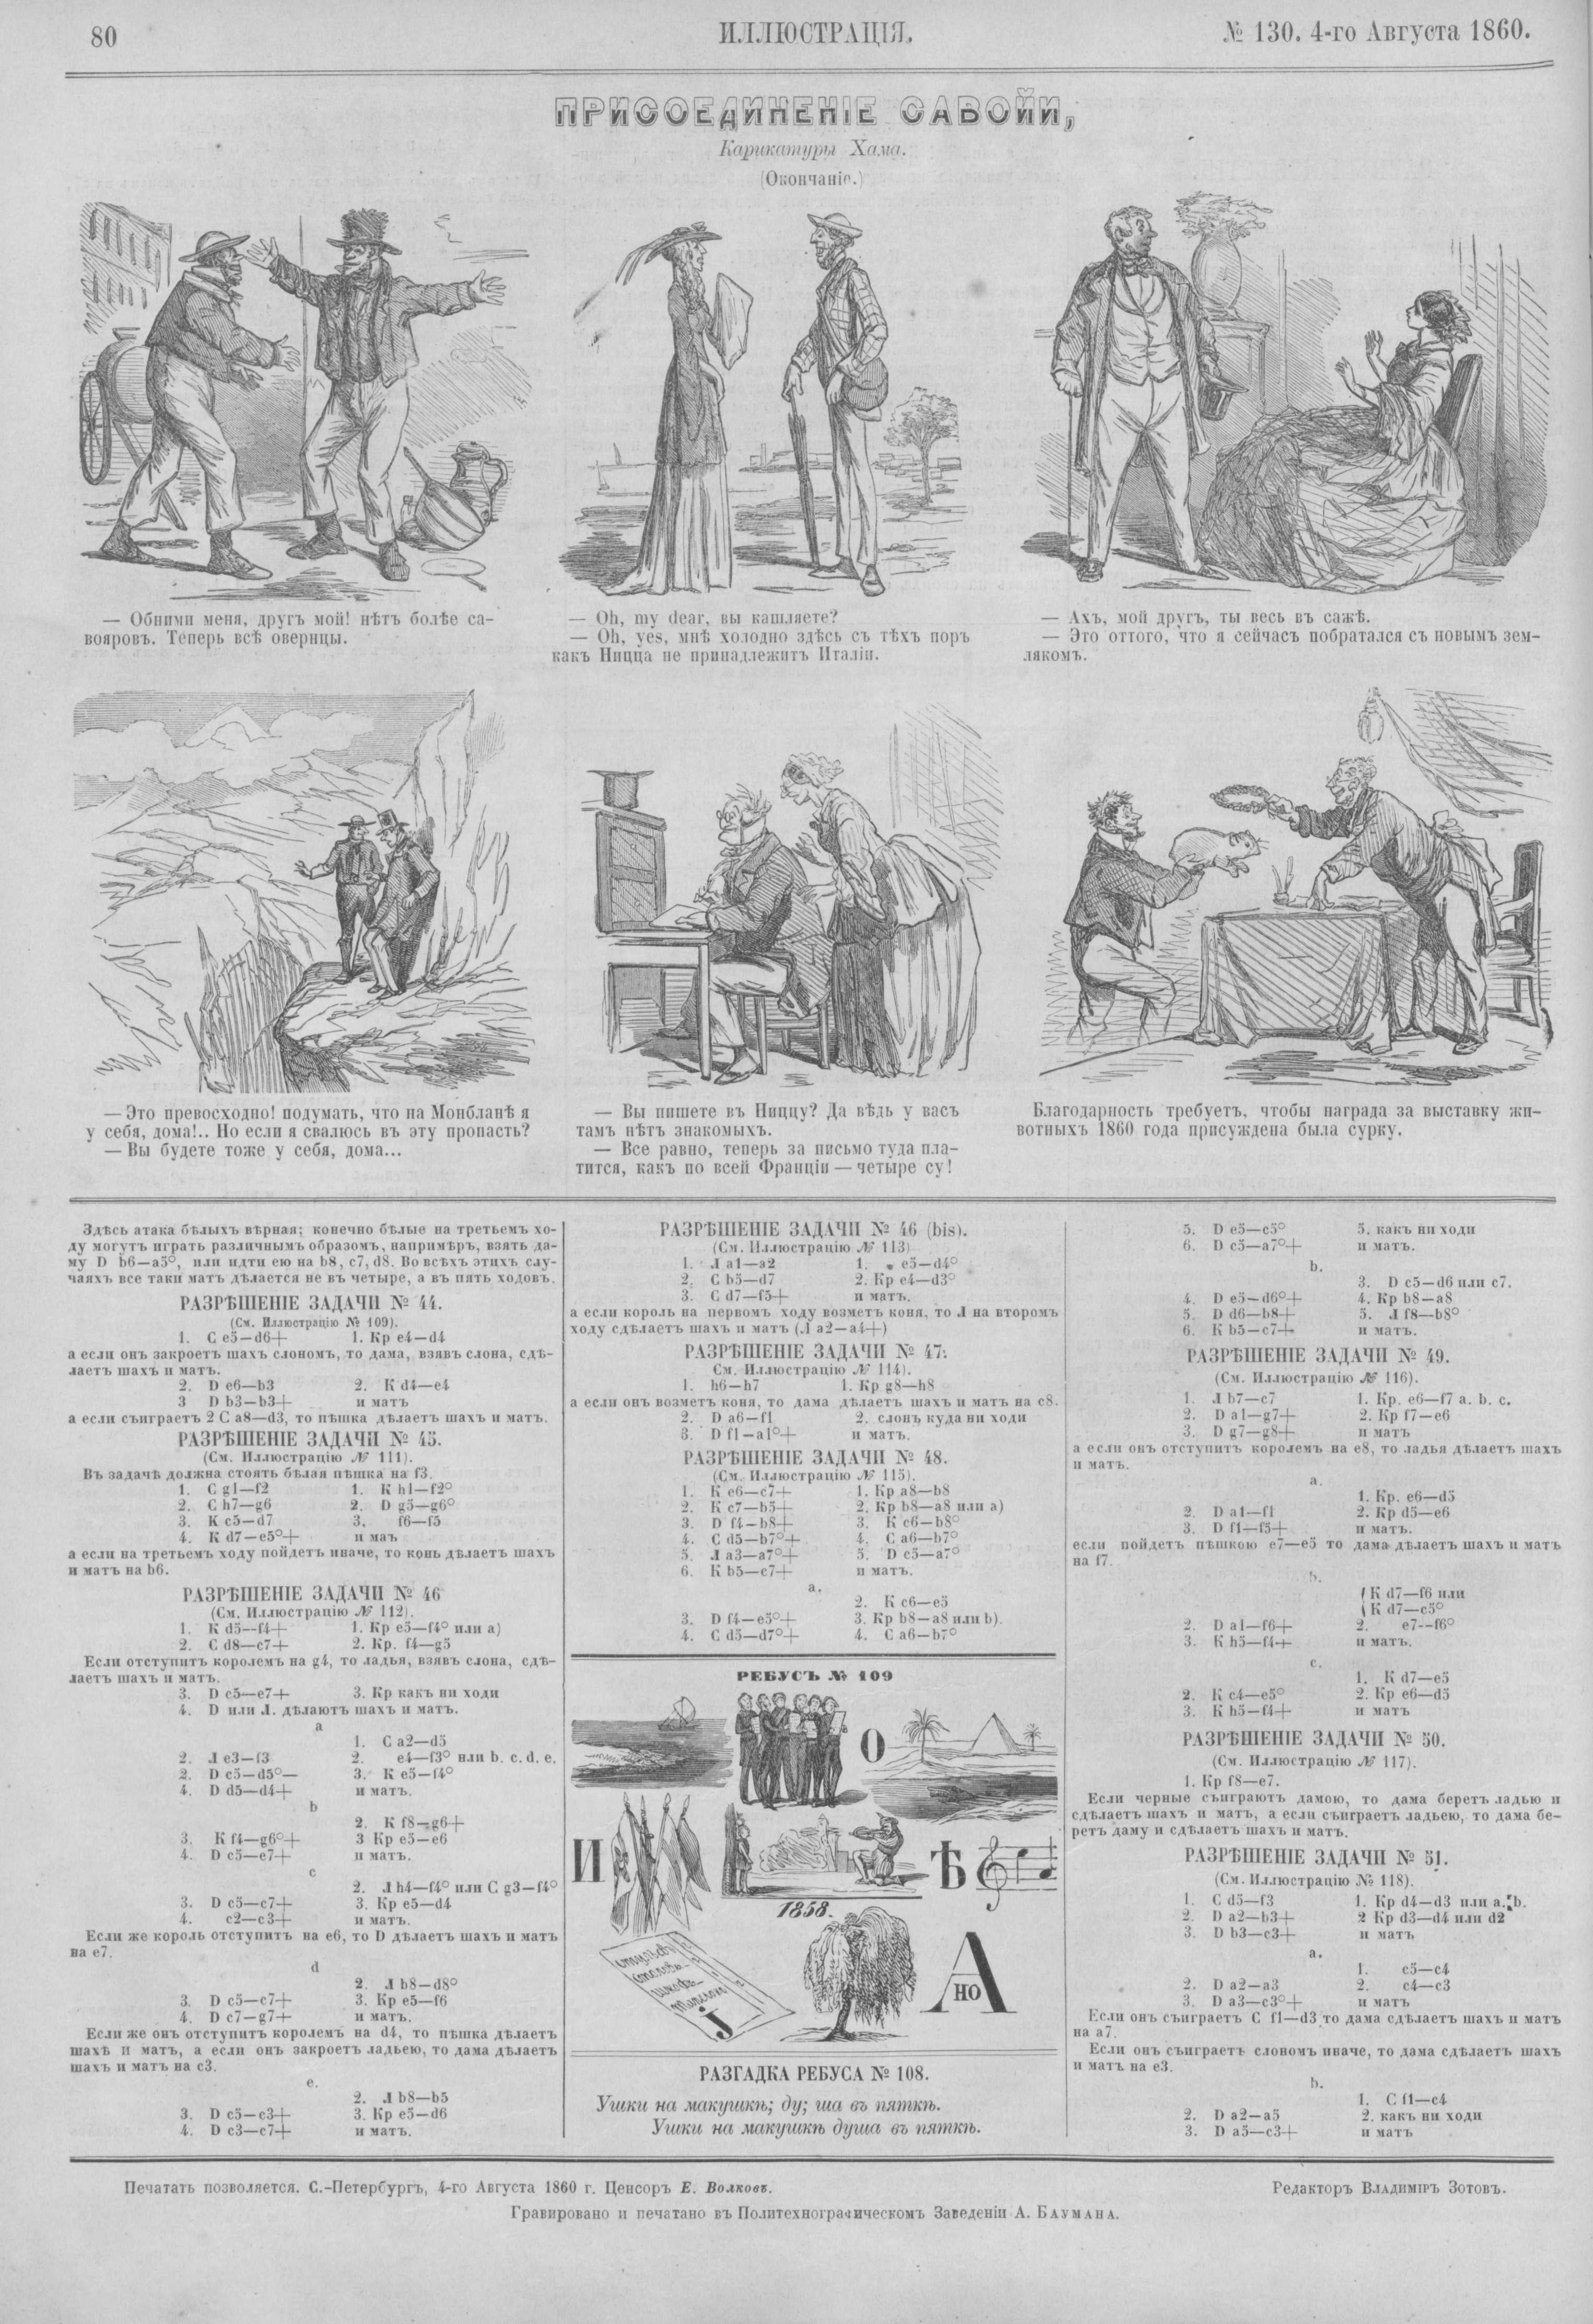 Cham. Присоединение к Савойе. Илл., 1860 №130, 4 авг. С. 82.jpg